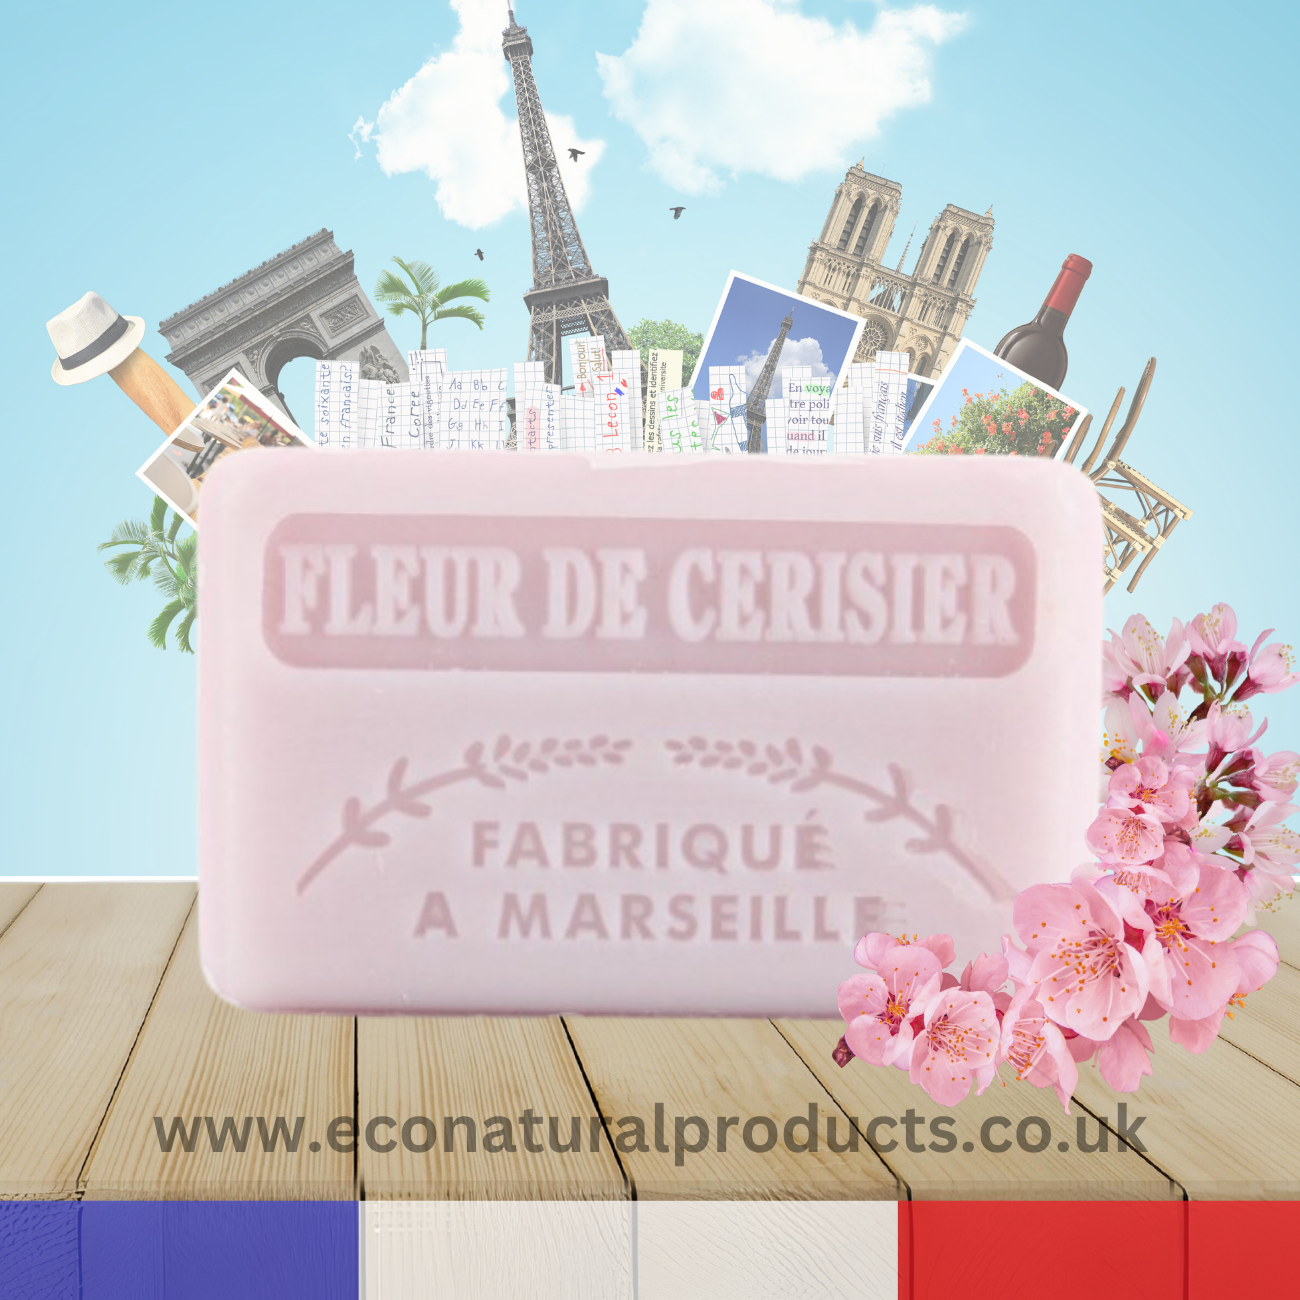 French Marseille Soap Fleur de Cerisier (Cherry Blossom) 125g